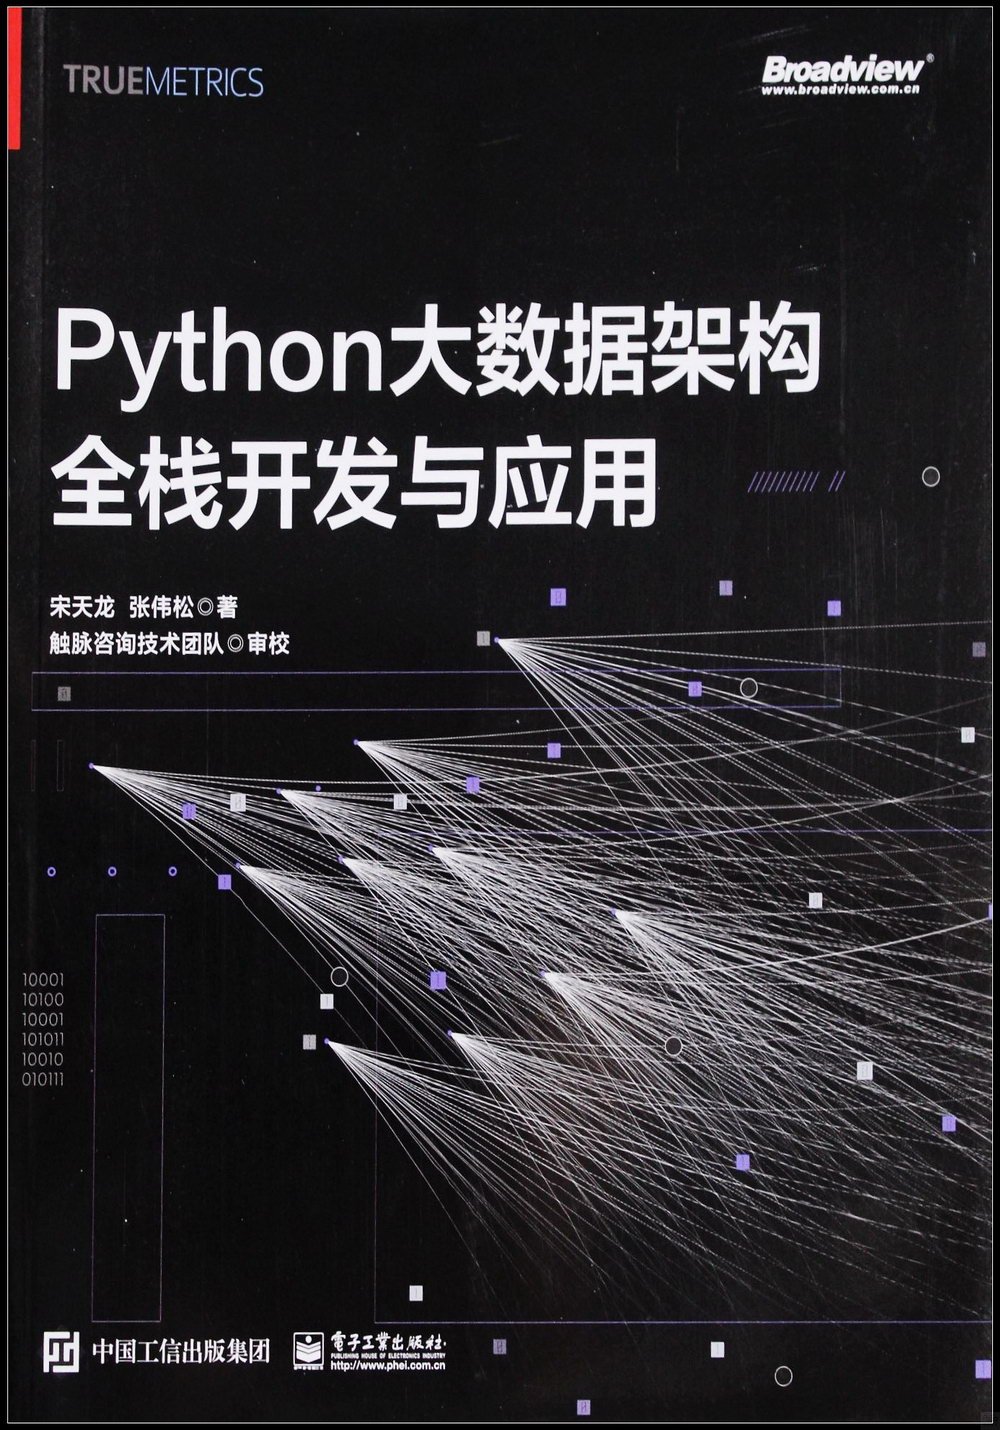 Python大數據架構全棧開發與應用